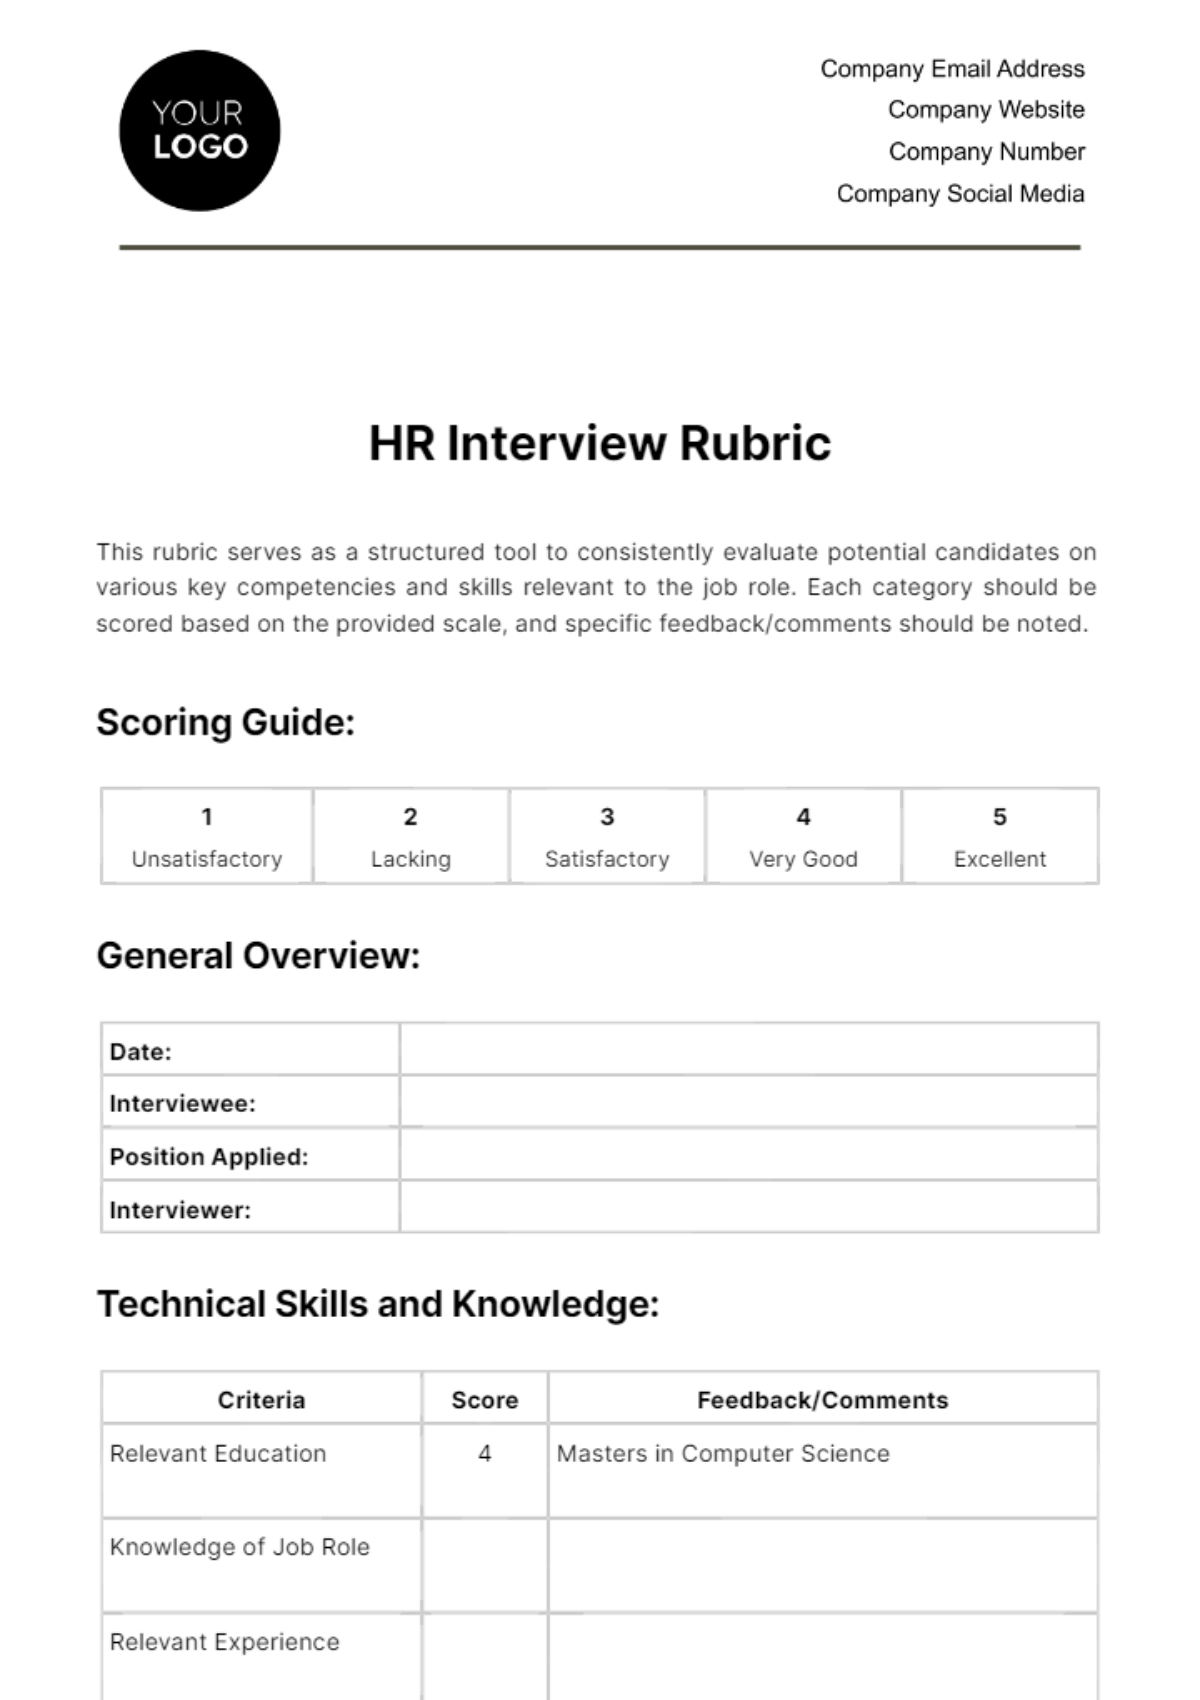 HR Interview Rubric Template